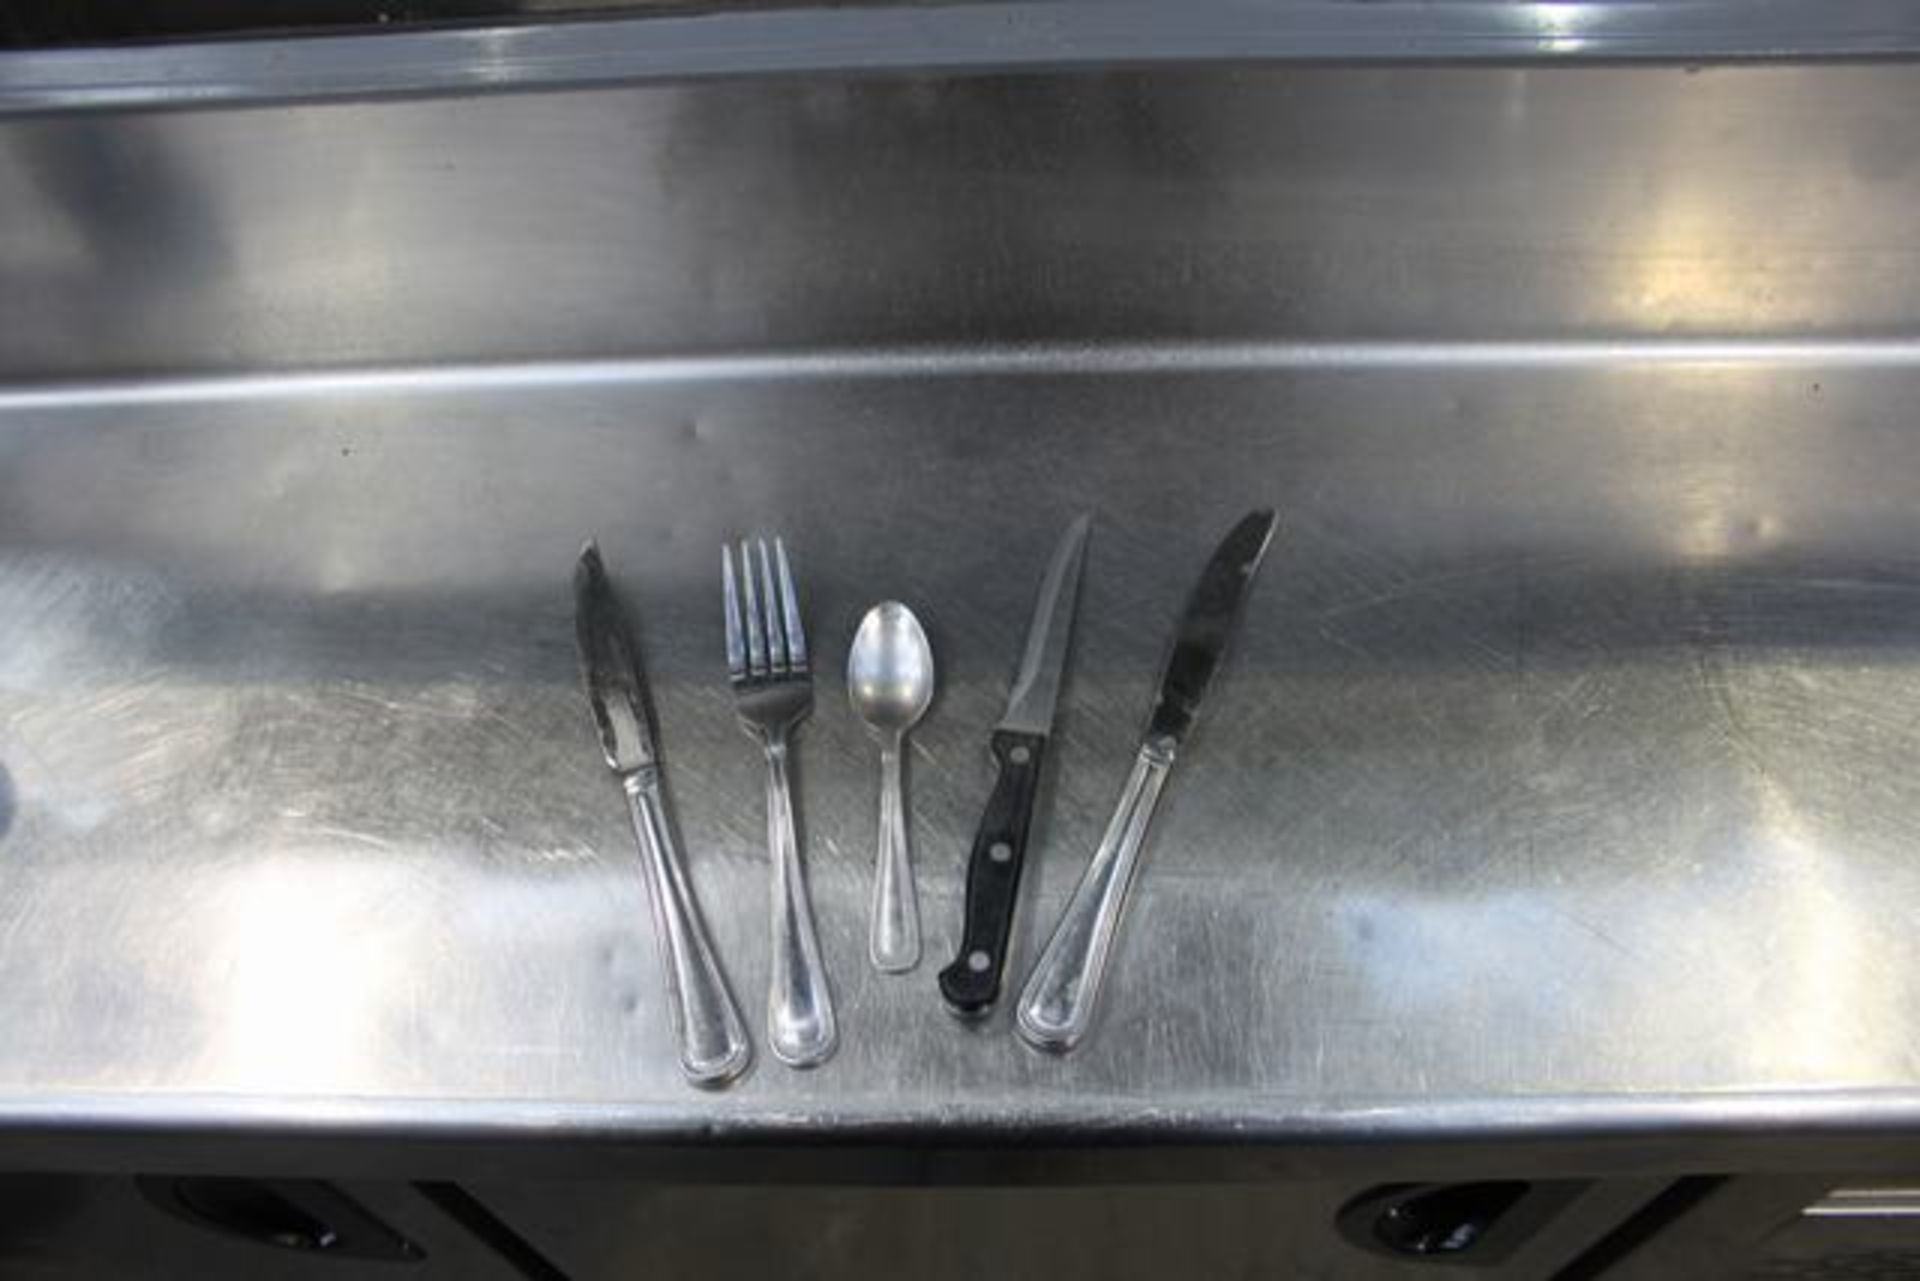 Various stainless steel cutlery